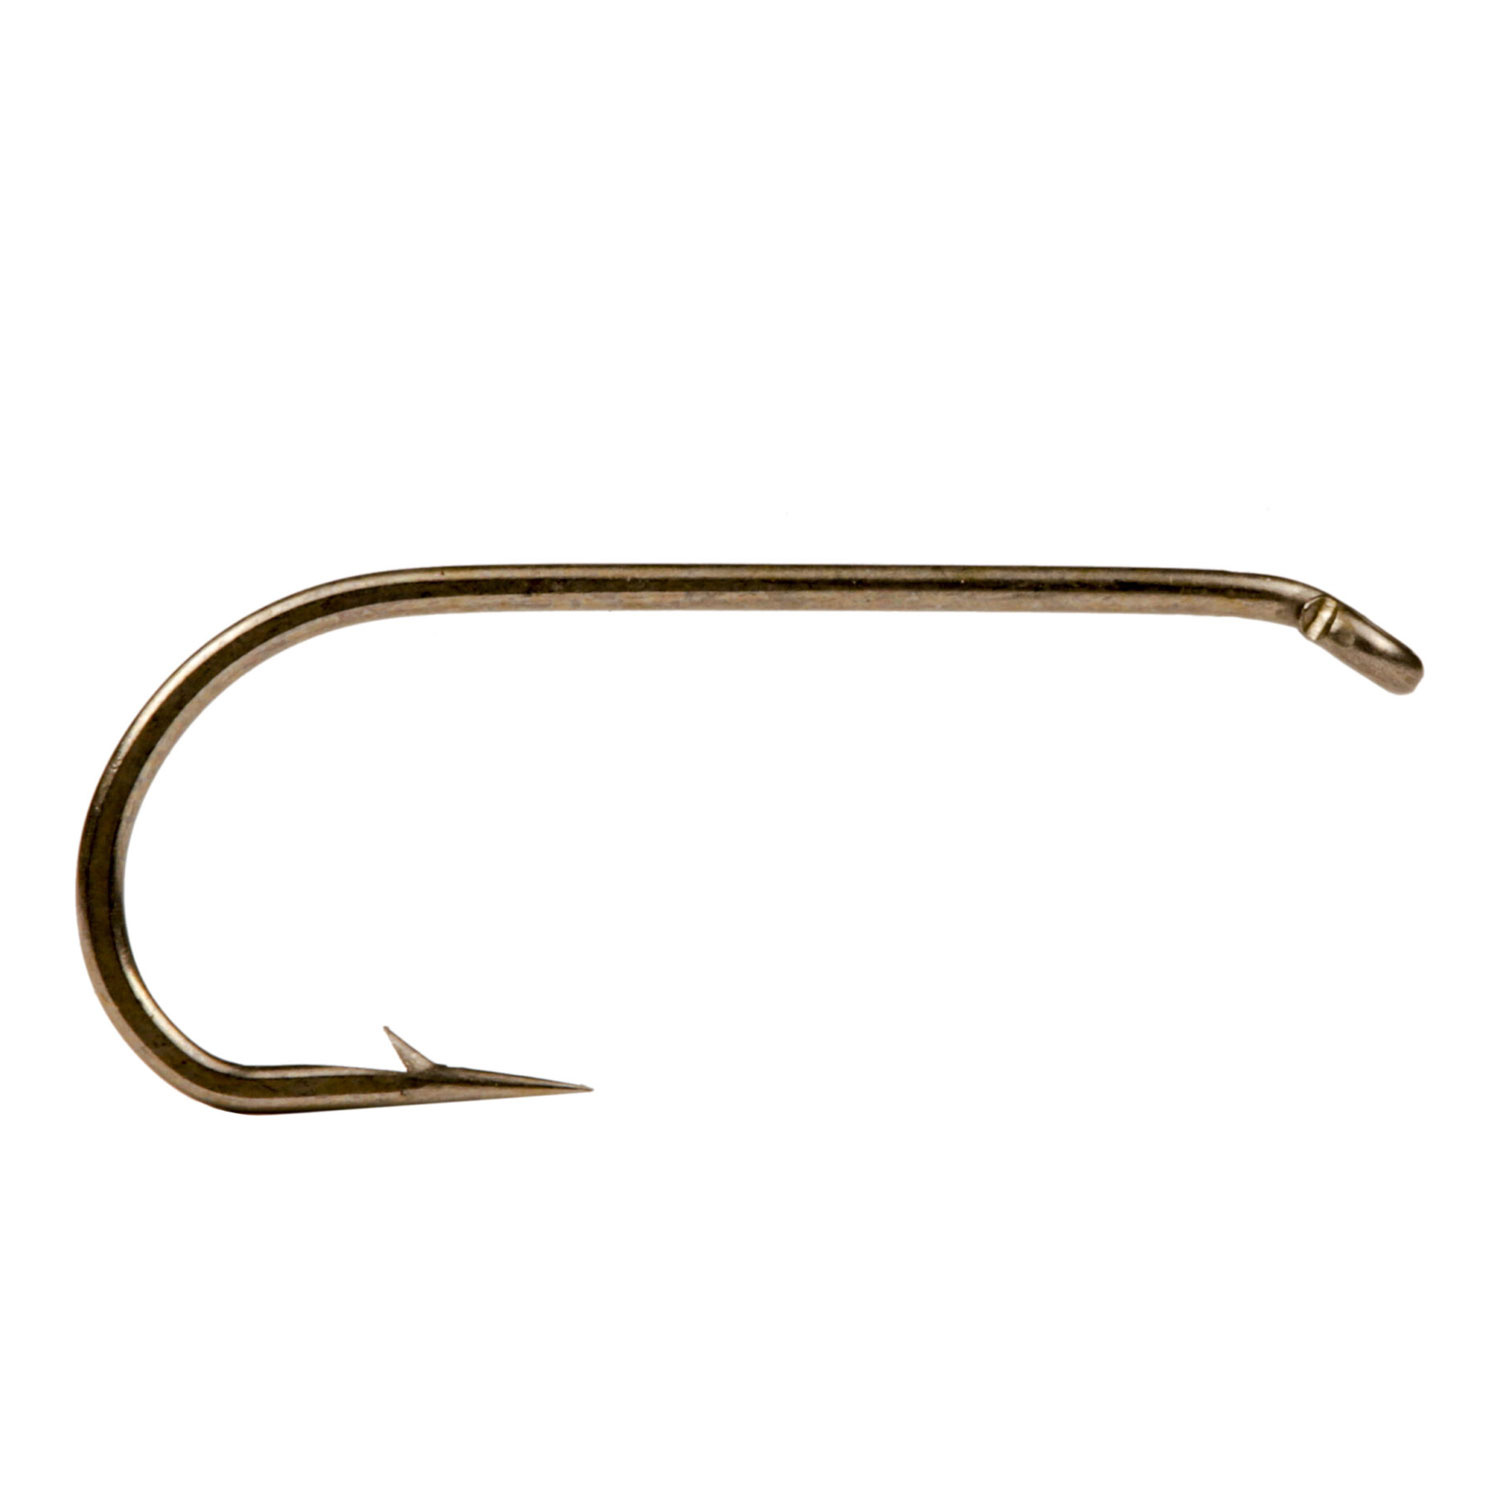 Sprite Hooks All Purpose Dry Bronze S1401 25-pack